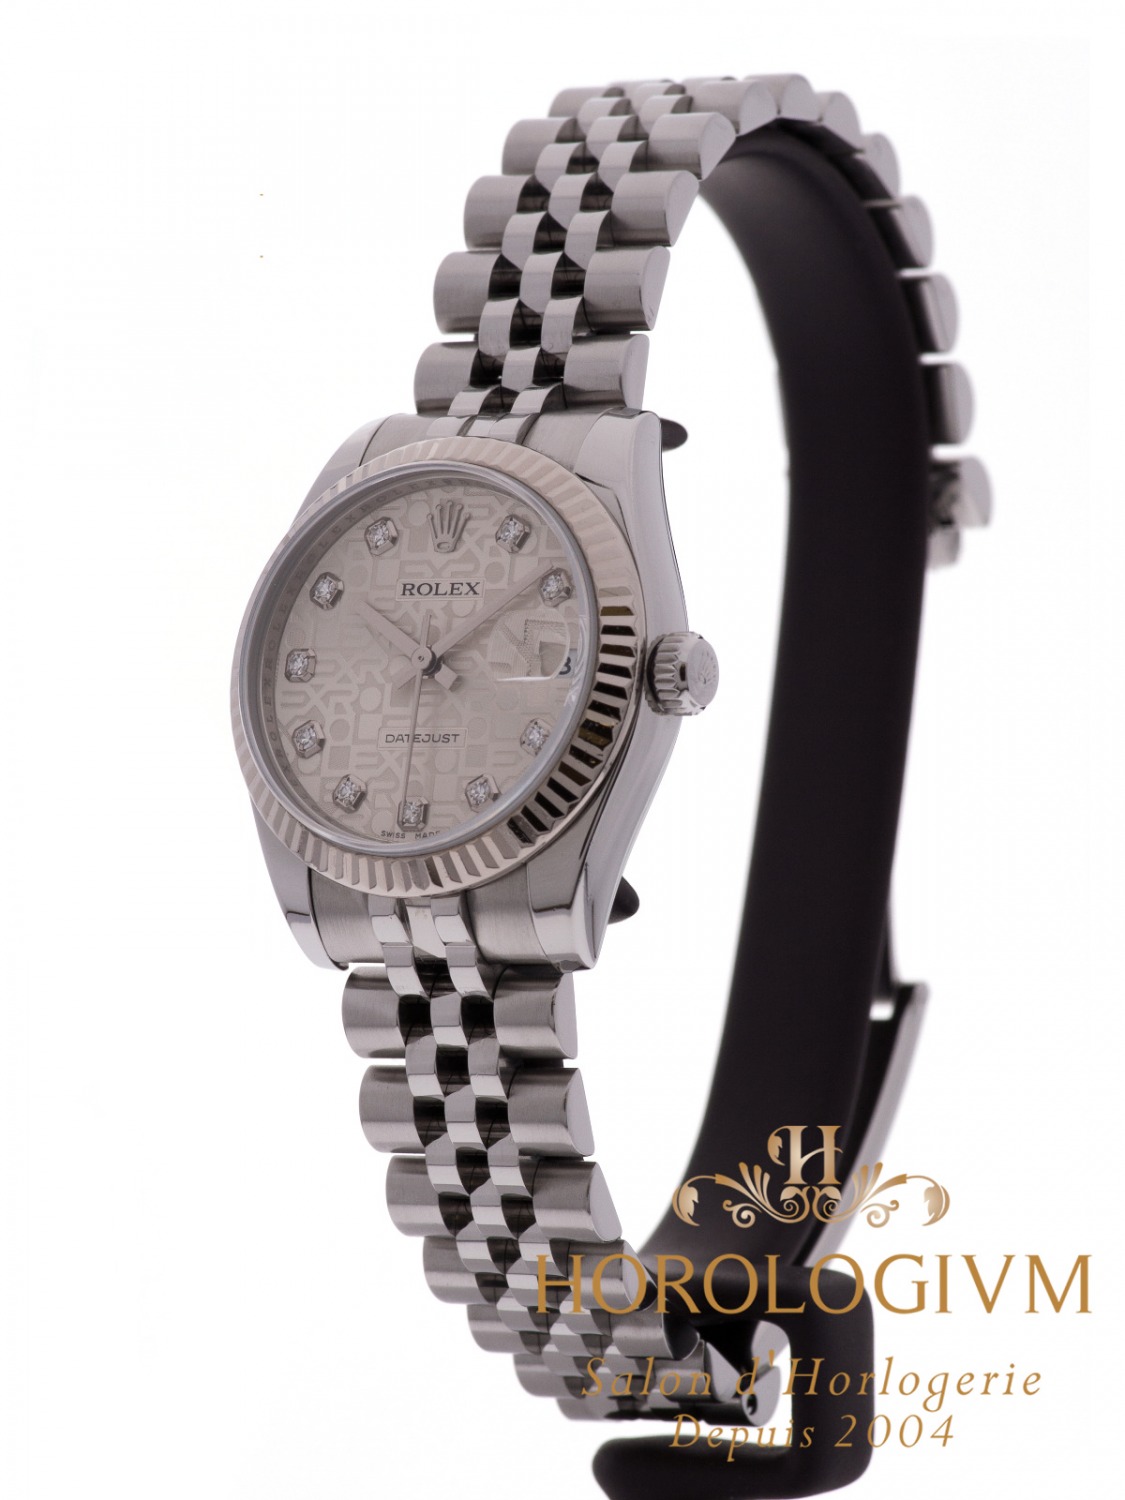 Rolex Datejust 31MM “Anniversary Diamond Dial” watch, silver